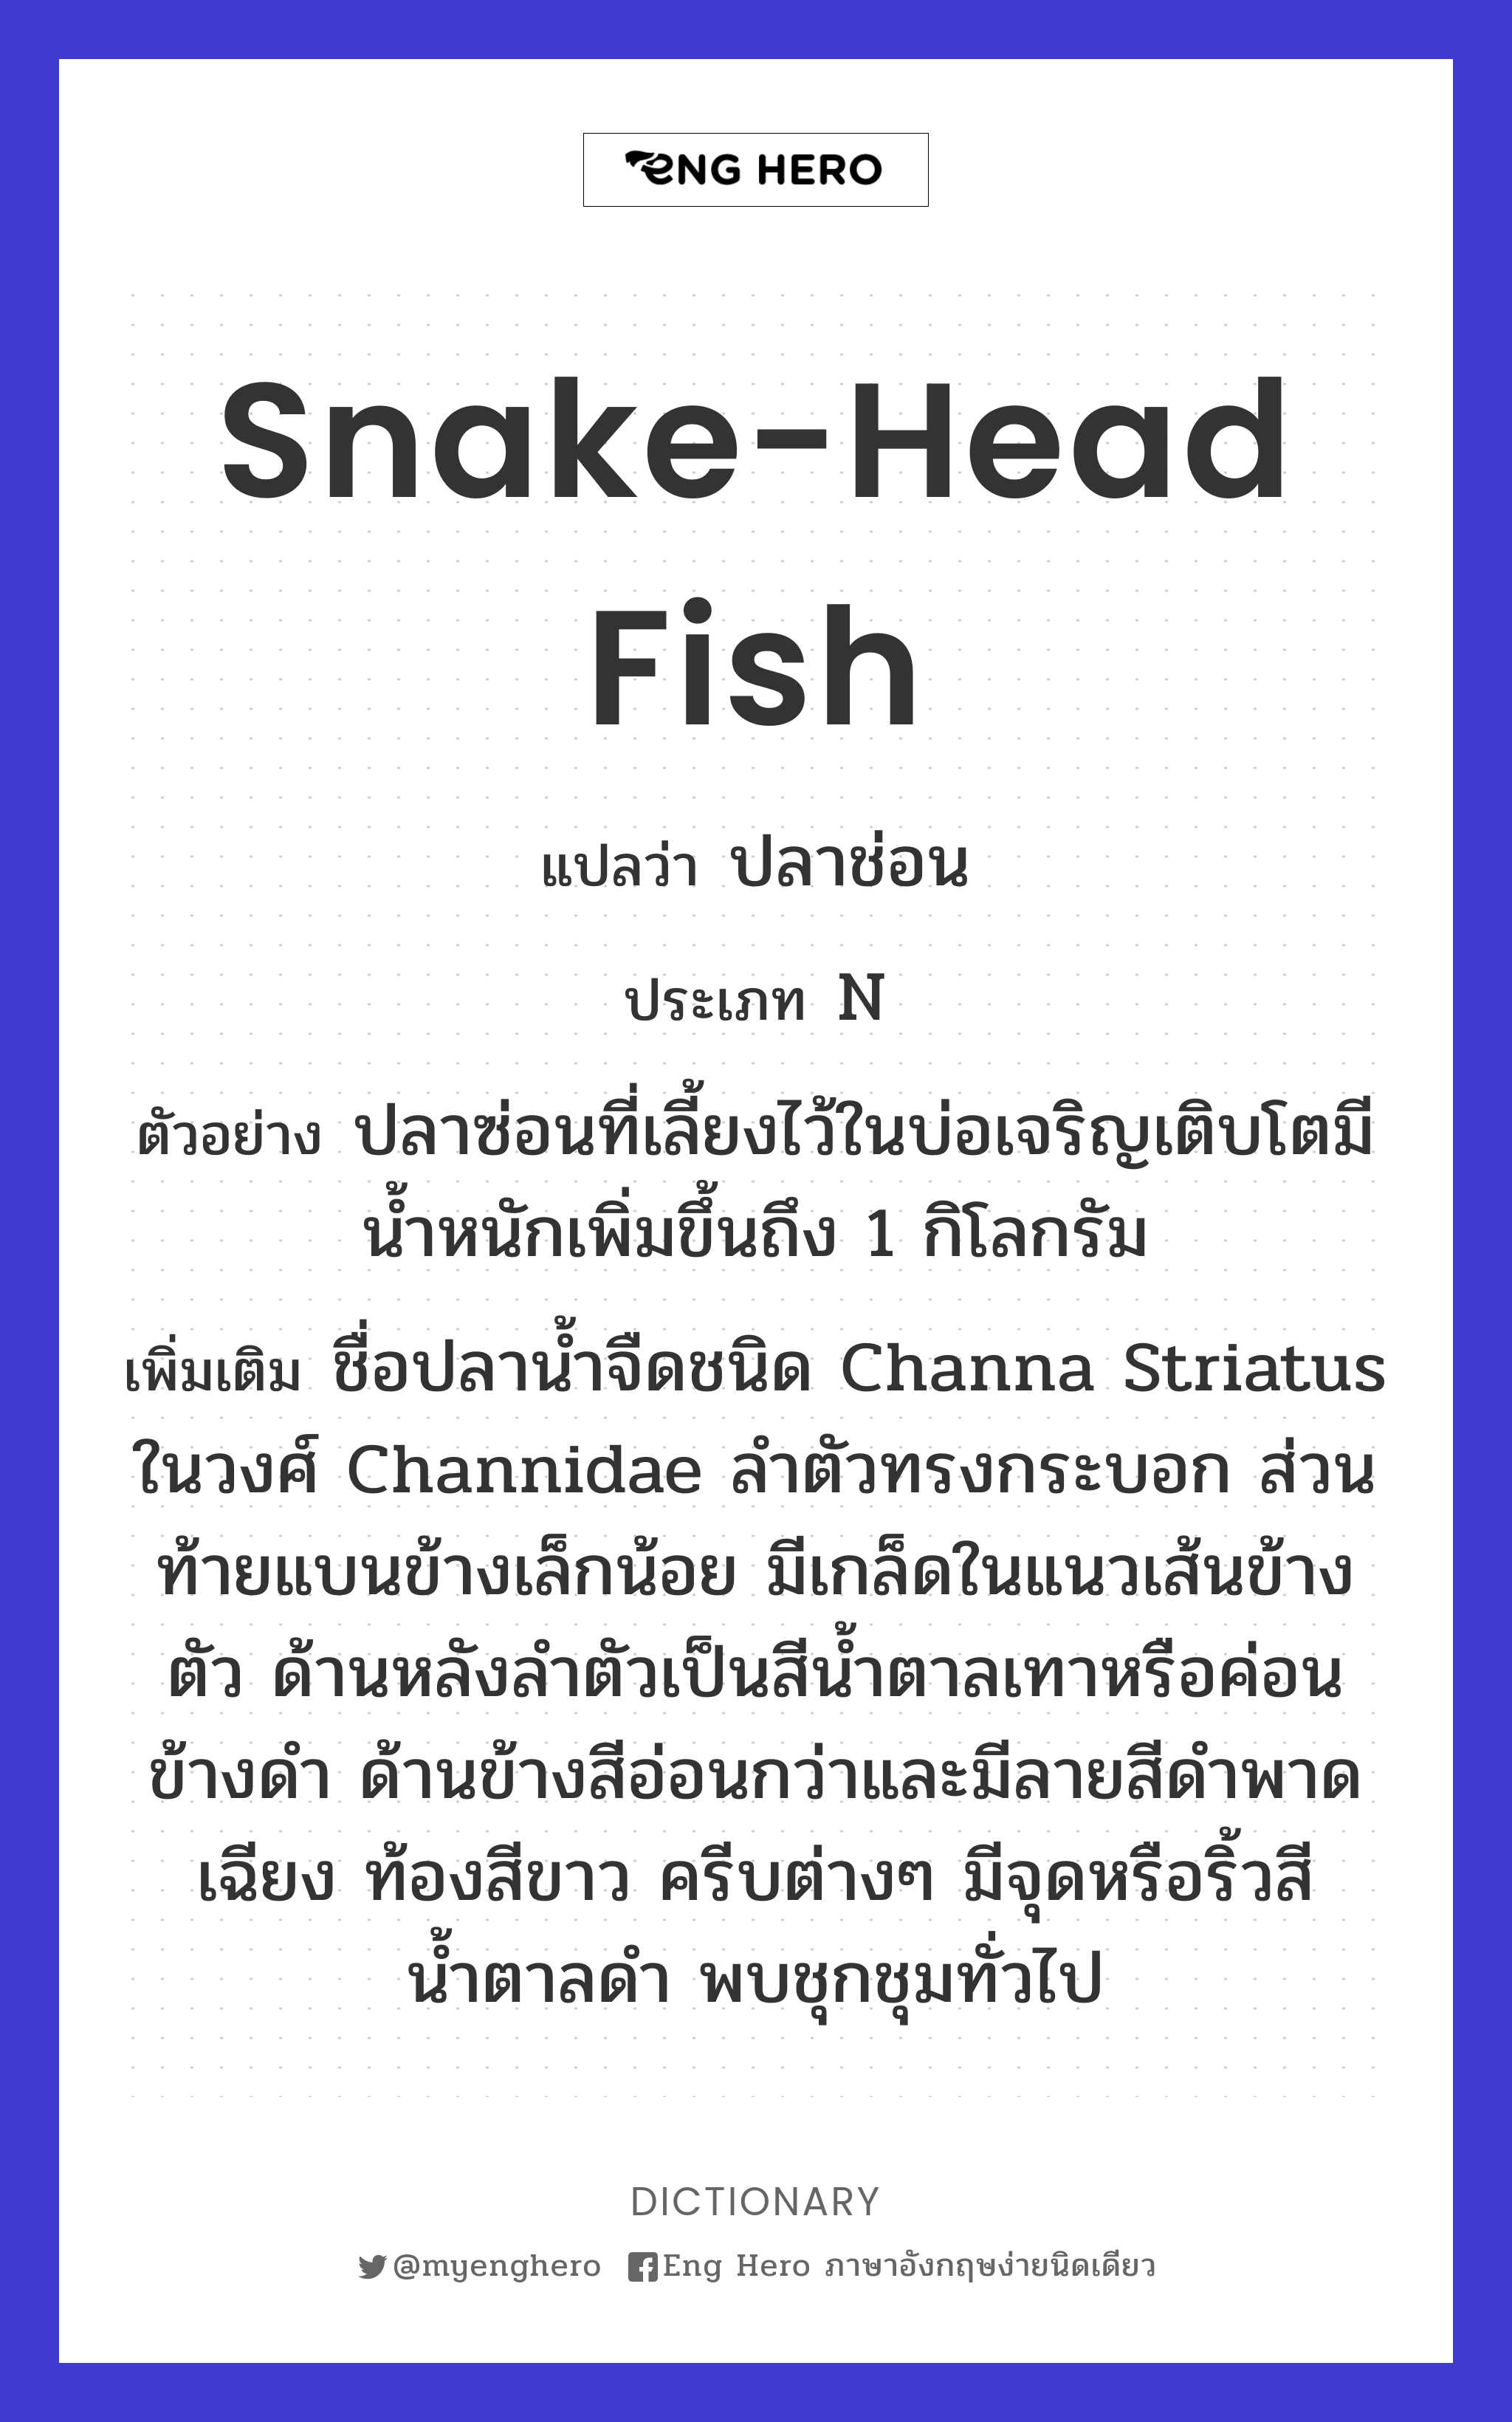 snake-head fish